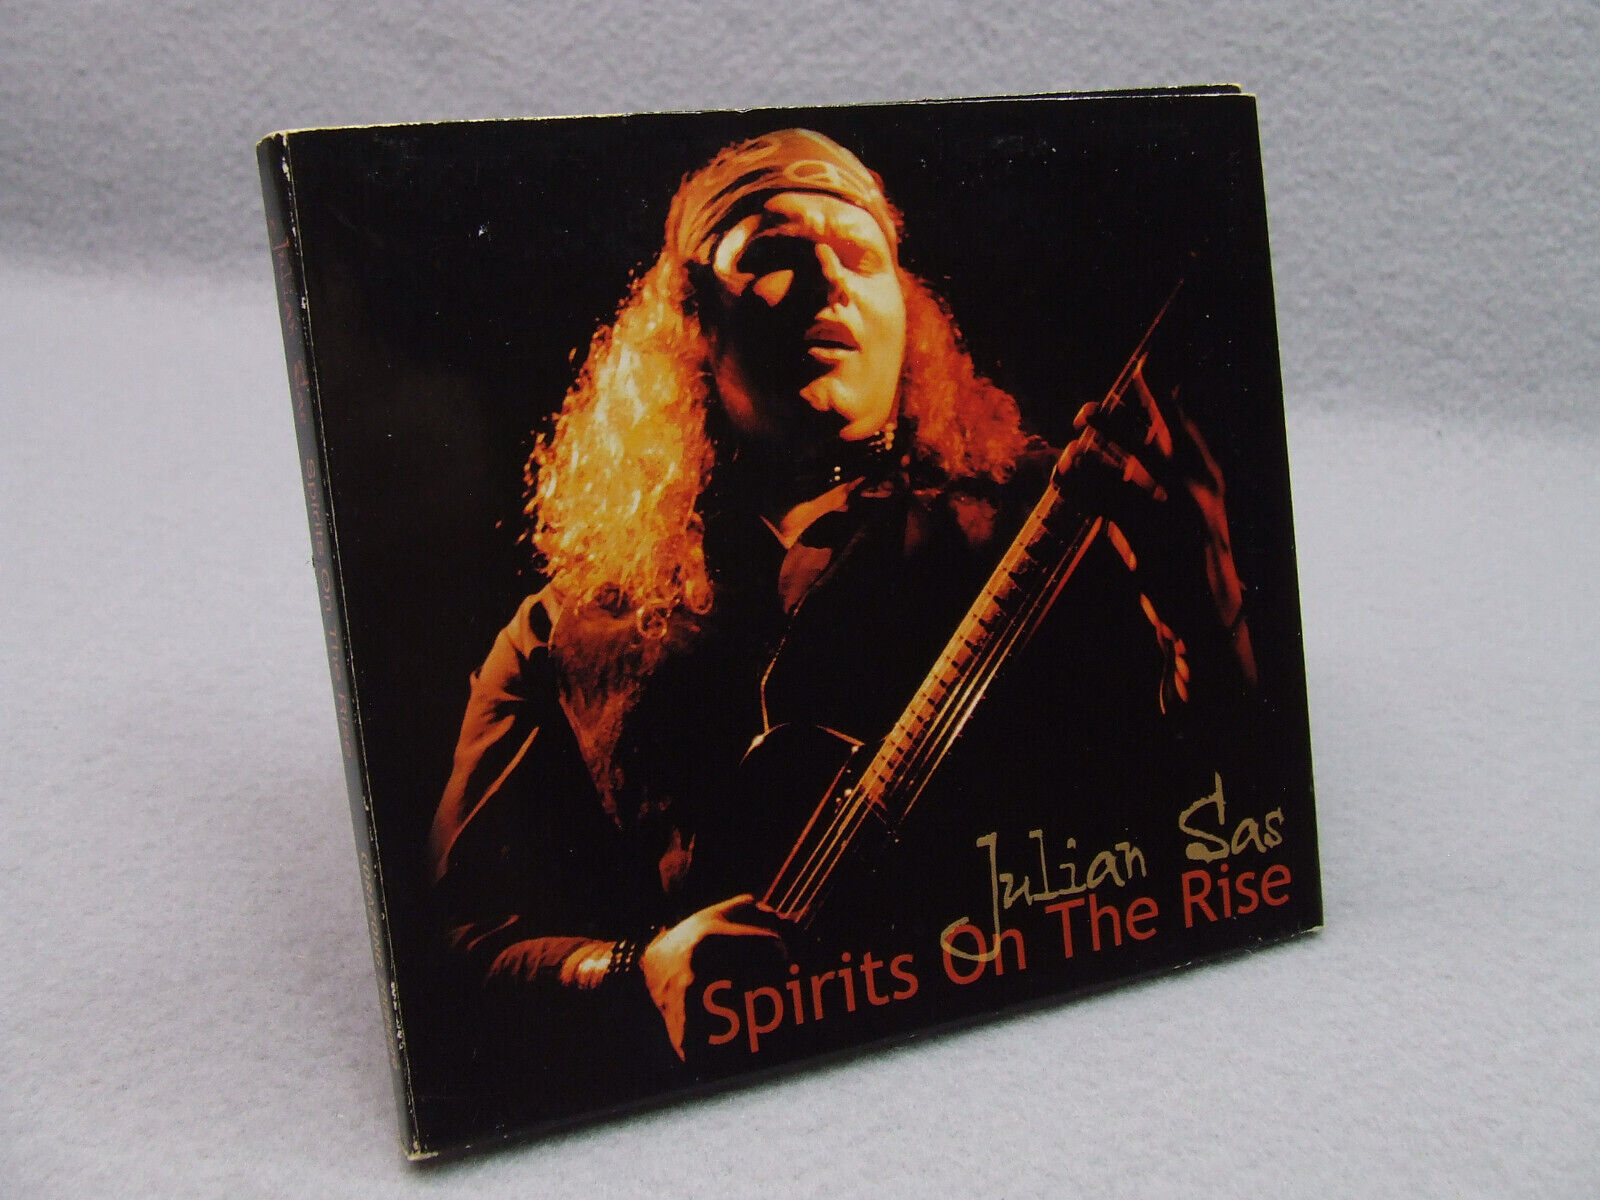 Julian Sas - Spirits On The Rise (CD, 2000 Corazong Records) Blues Rock